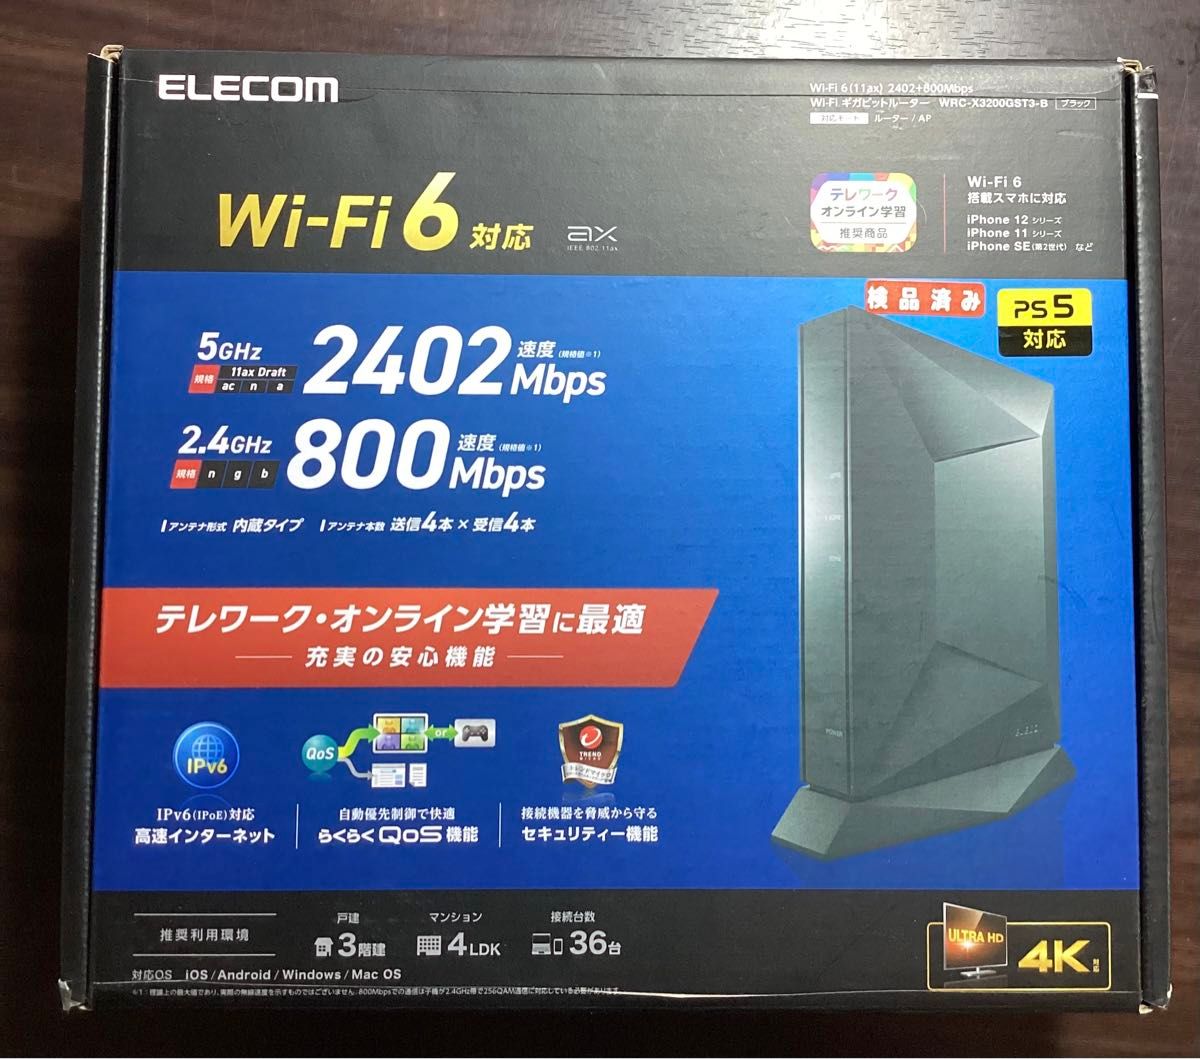 Wi-Fi 6(11ax) 2402+800Mbps Wi-Fi ギガビットルーターWRC-X3200GST3-B/中古/動作済み